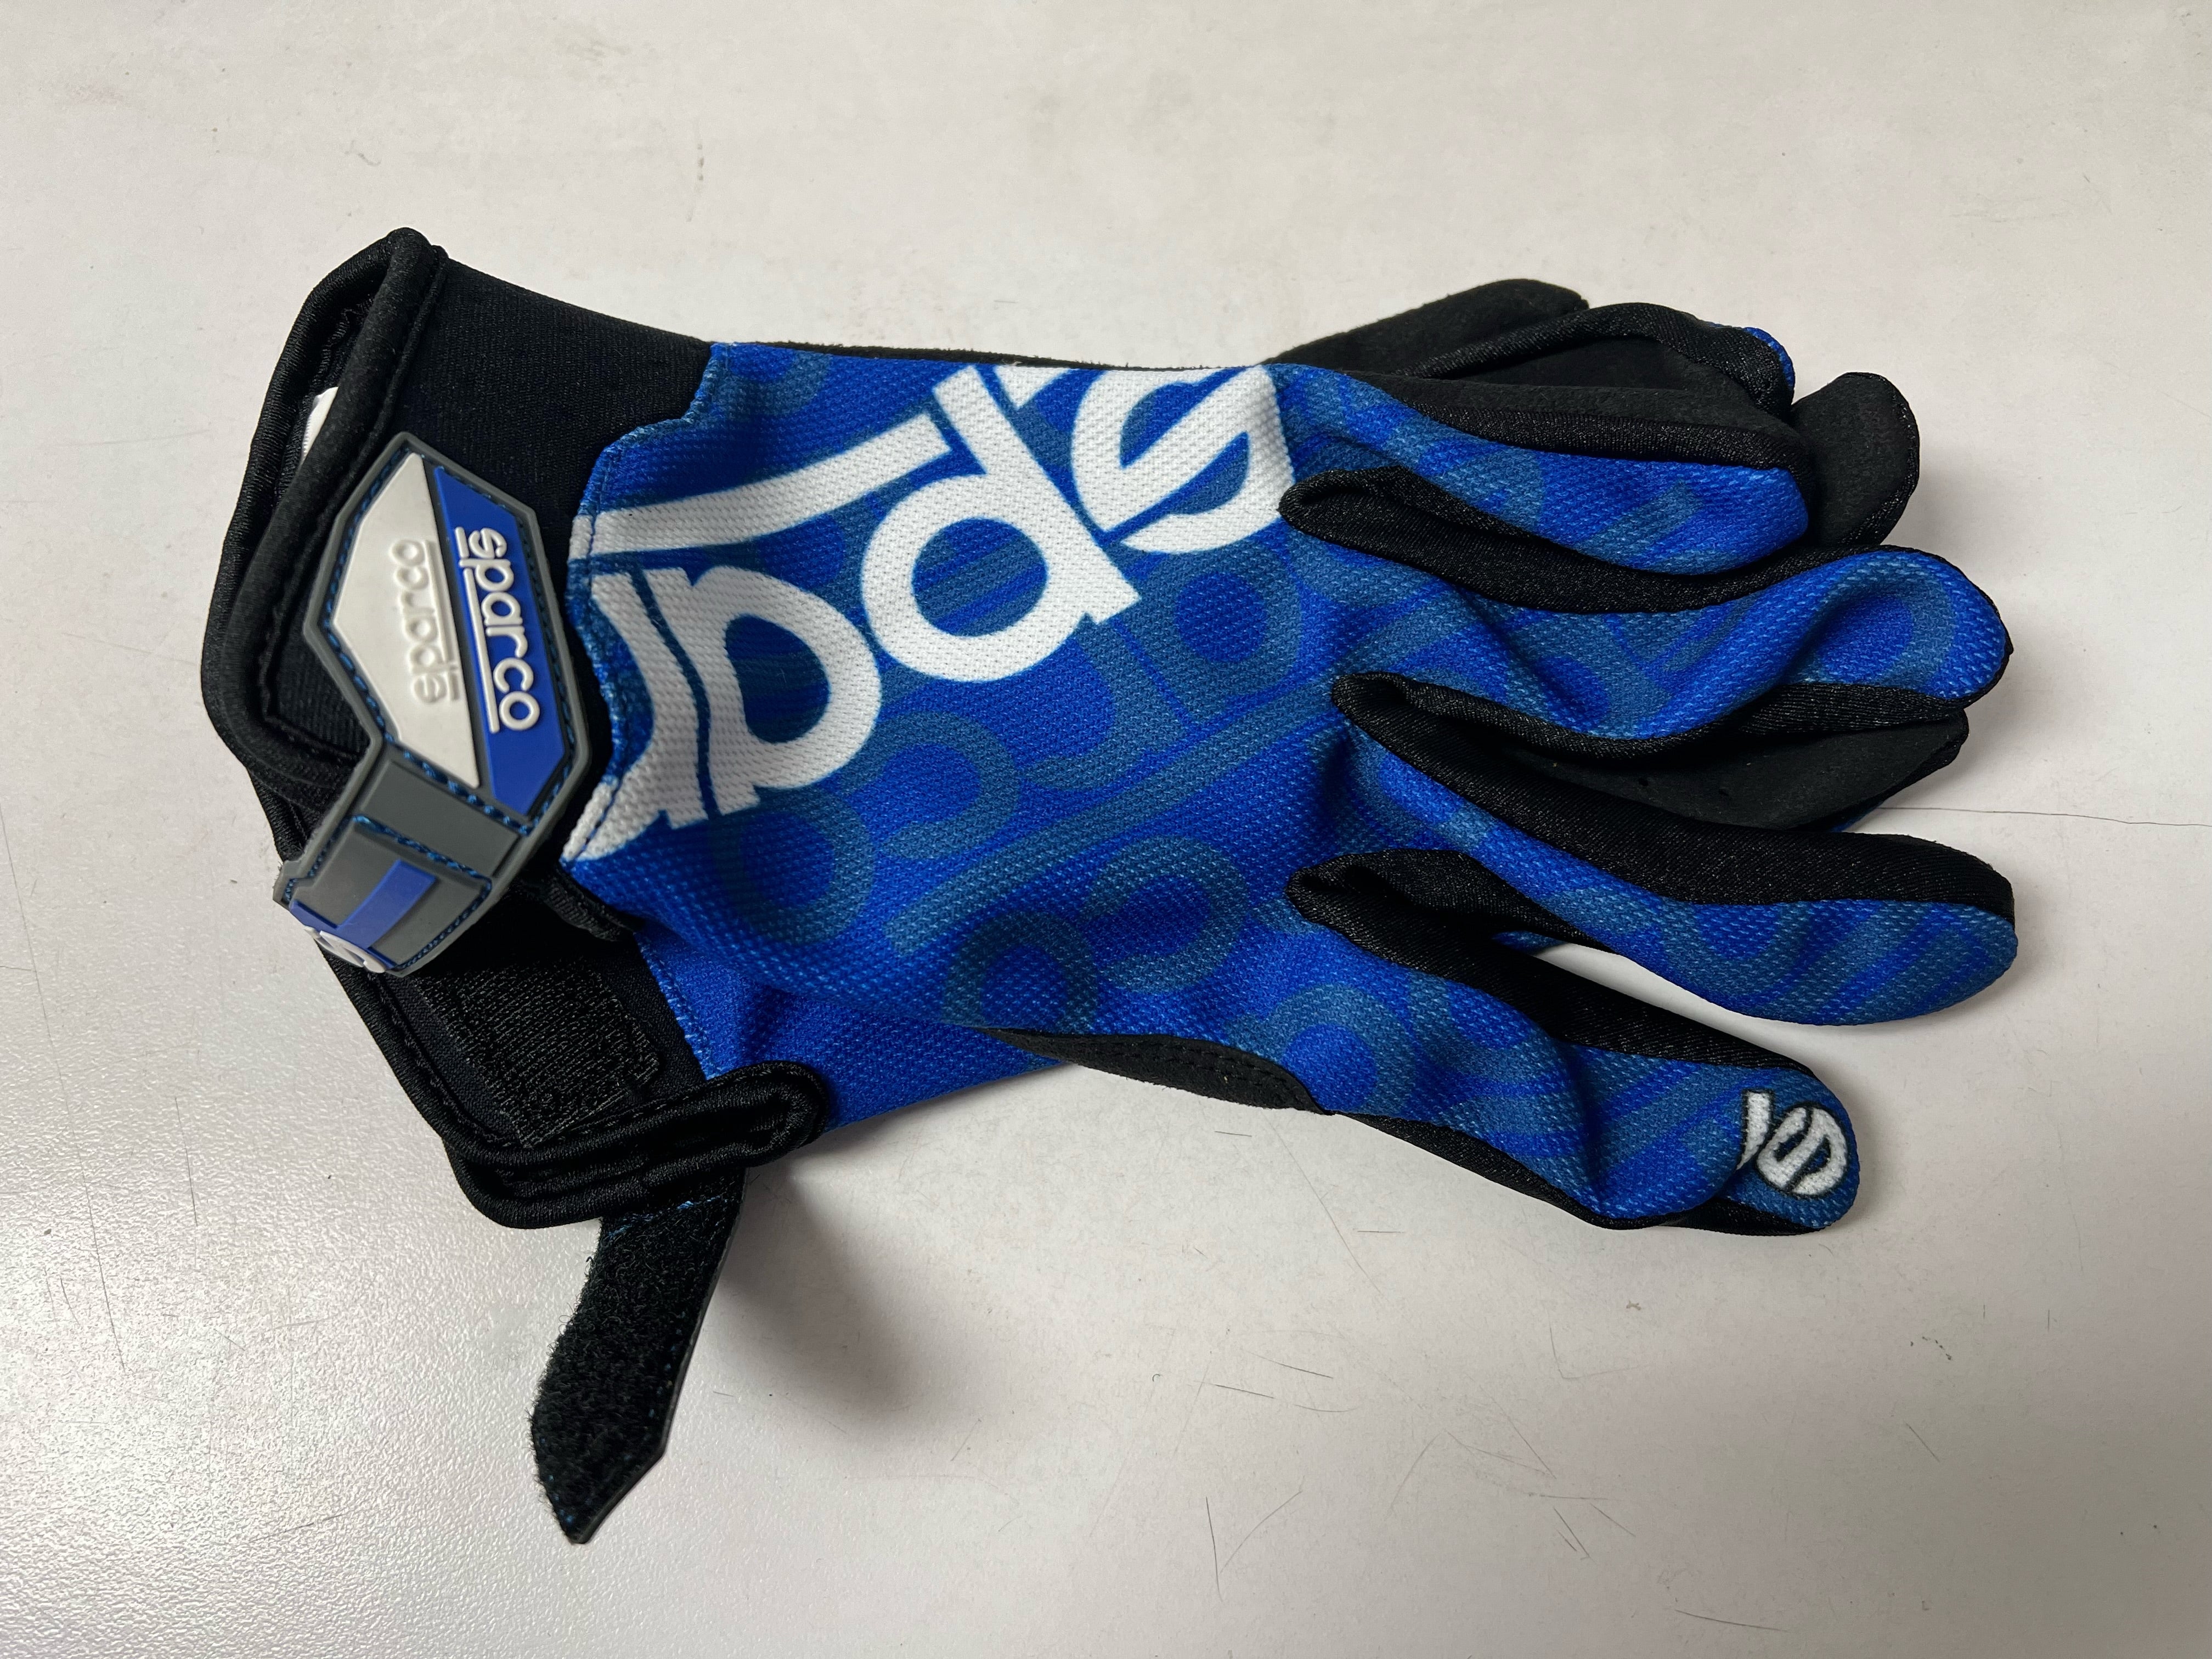 🔥【HOT SELLING】🔥Sparco Meca 3 Mechanics Gloves / Kart Gloves